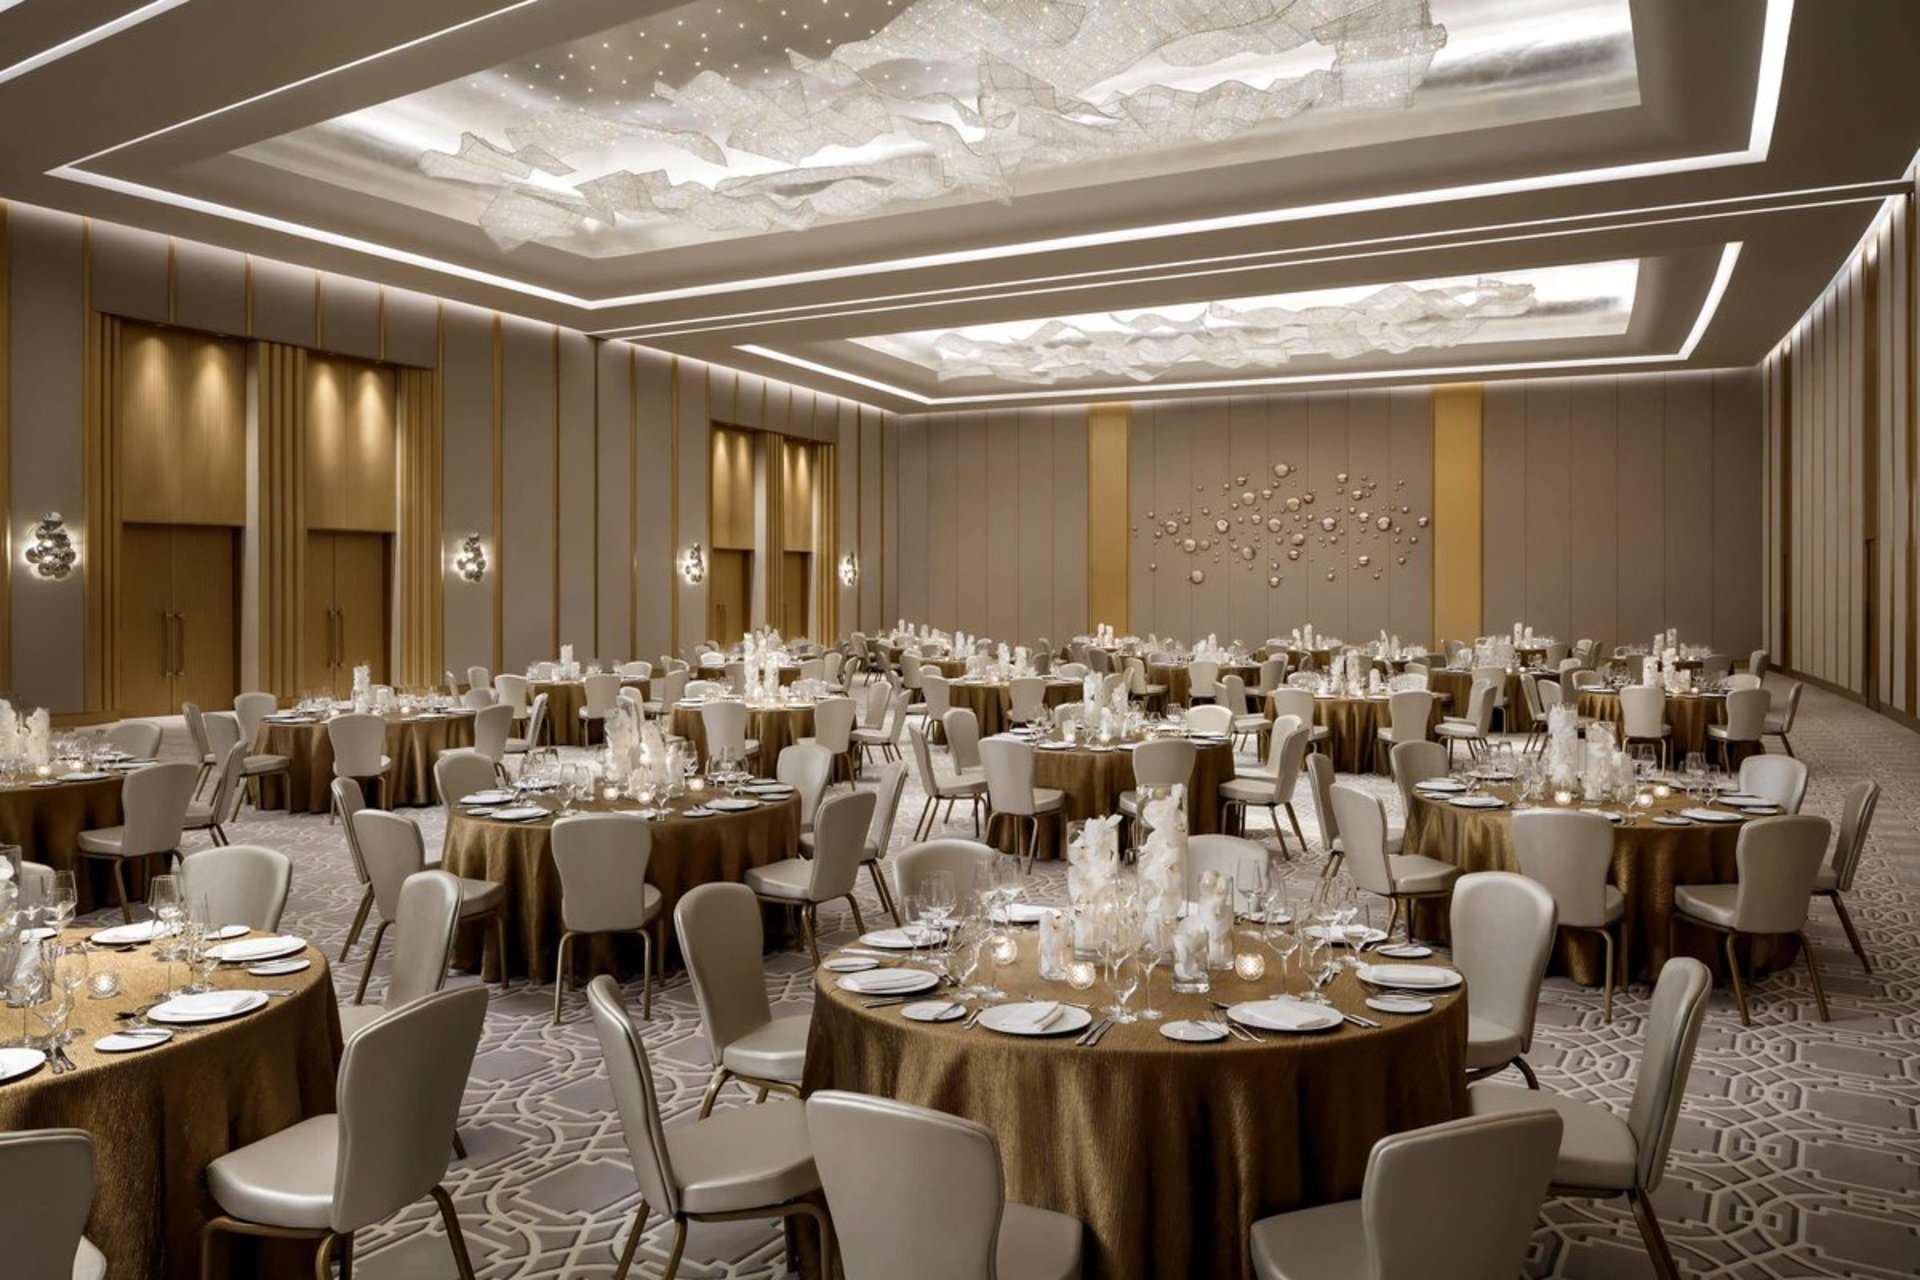 Diamond Ballroom C at Atlantis The Royal Hotel in in Dubai, United